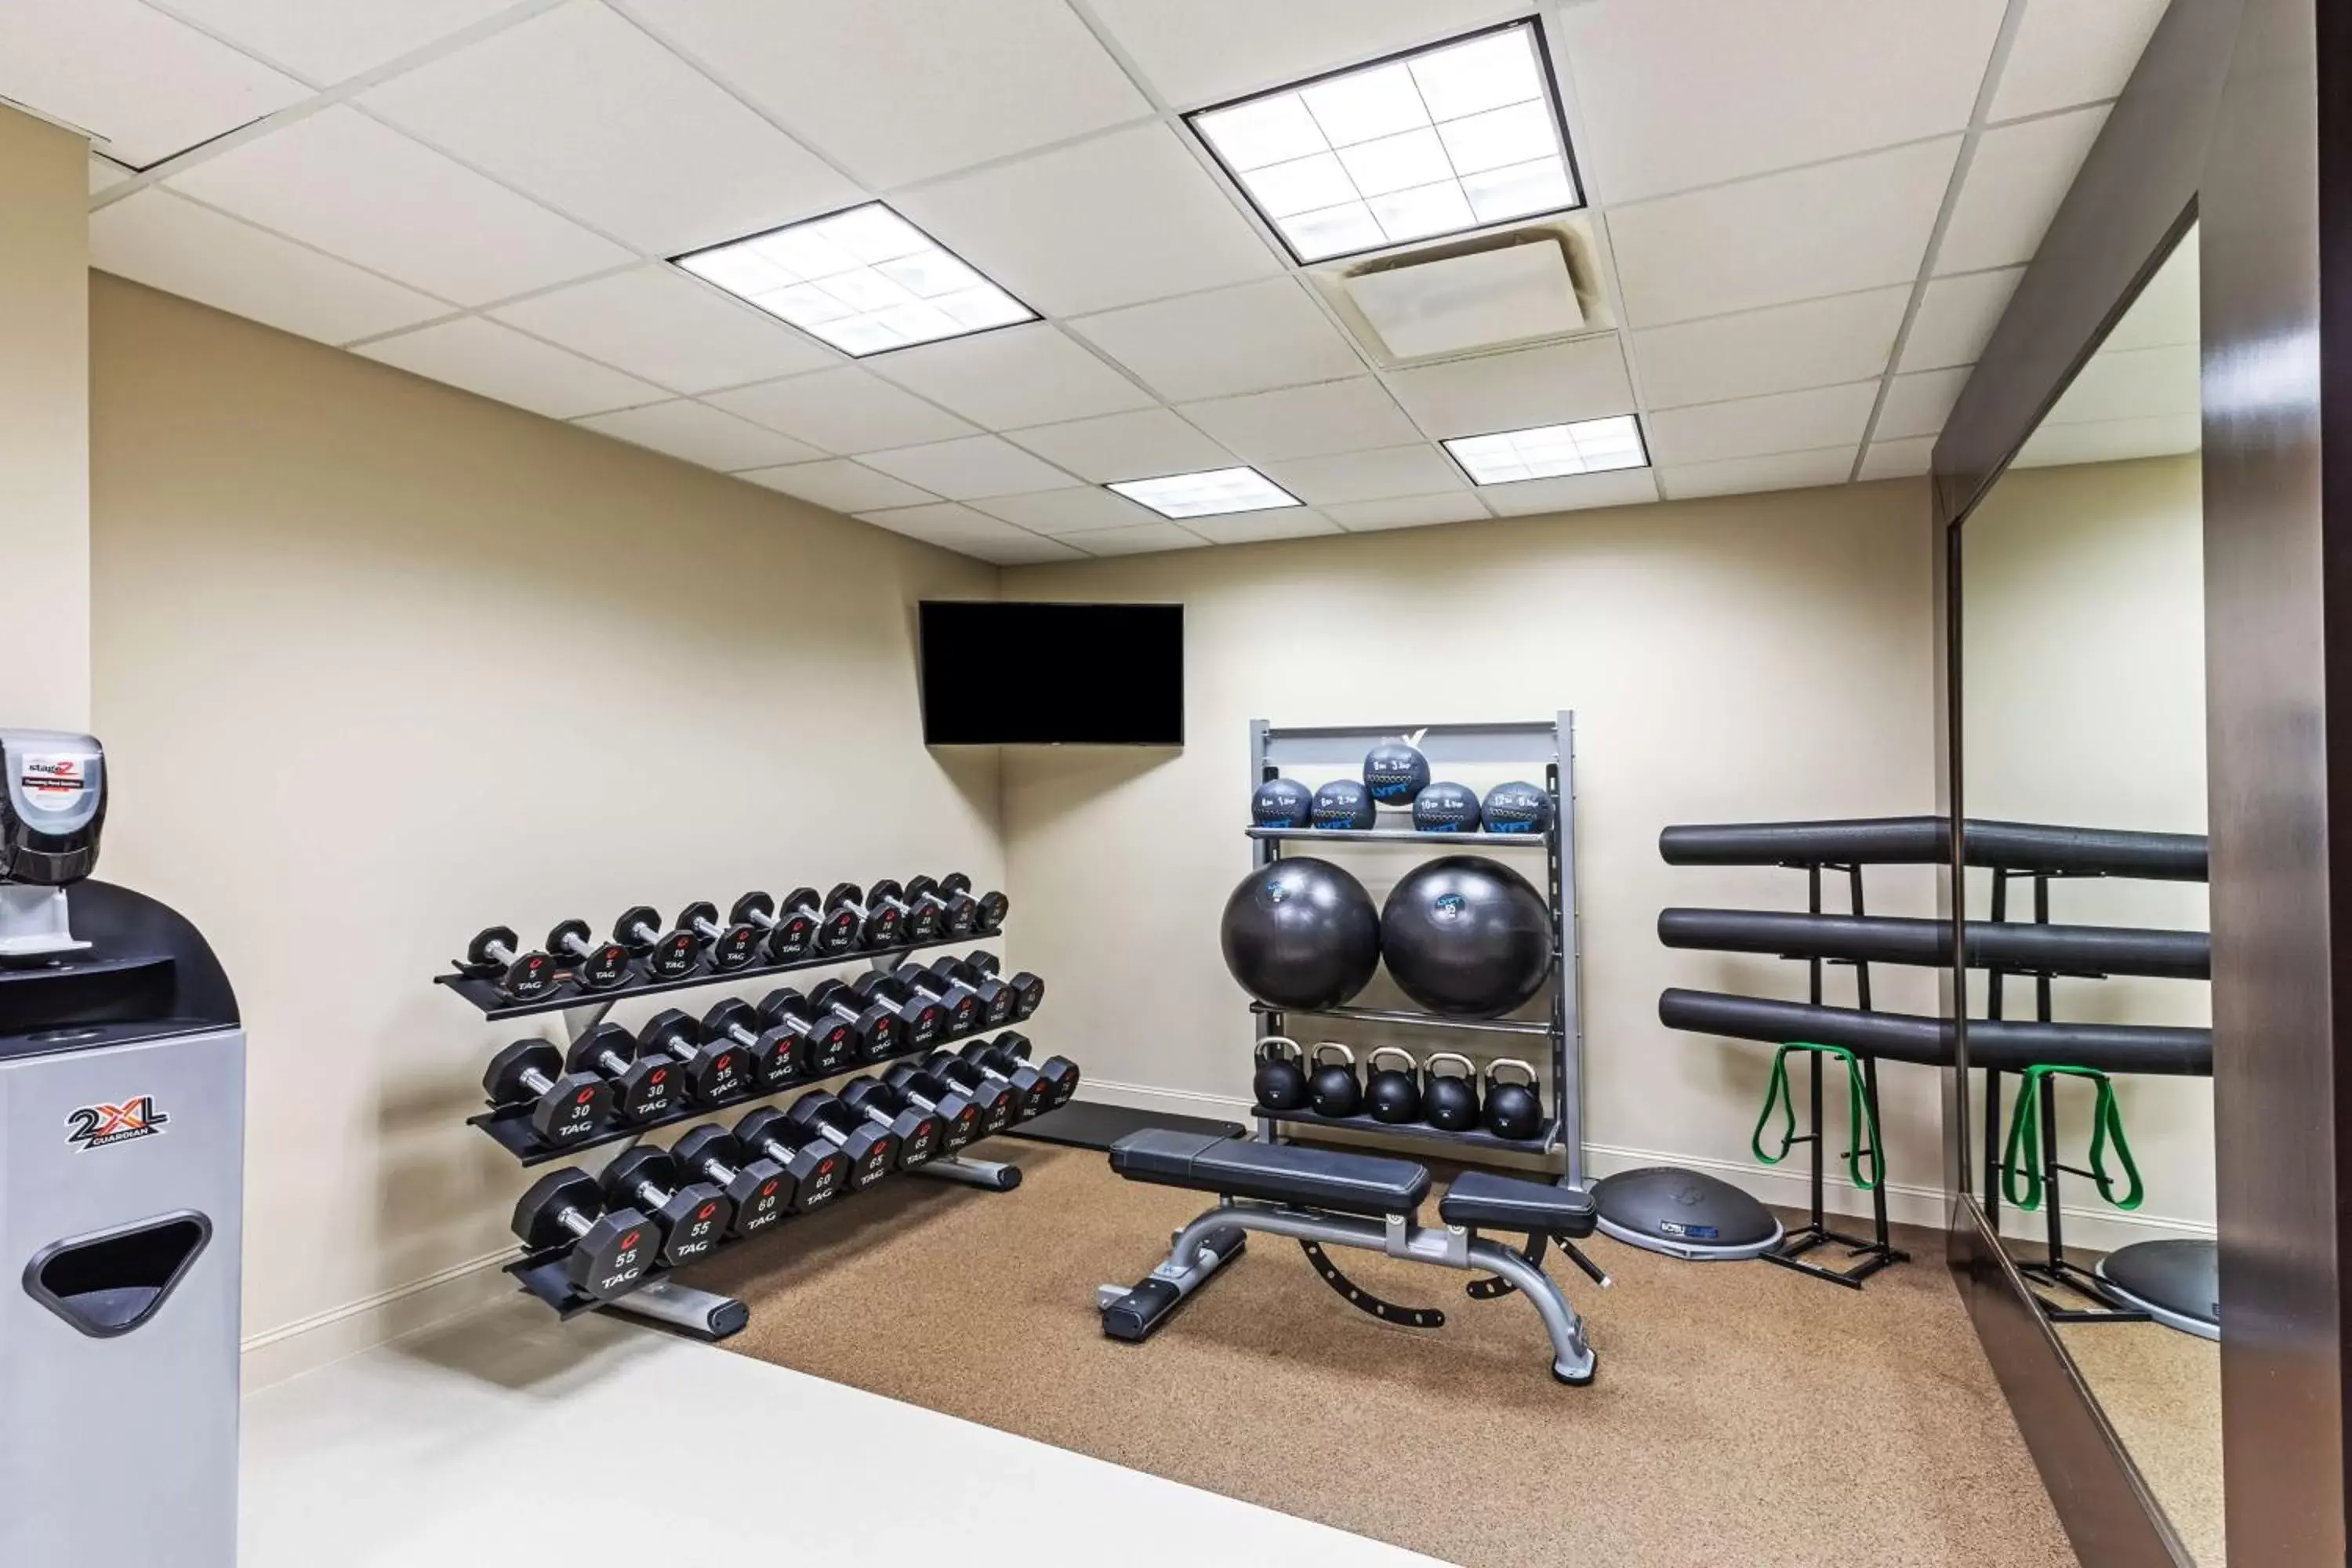 Fitness centre/facilities, Fitness Center/Facilities in Hilton Garden Inn Aiken